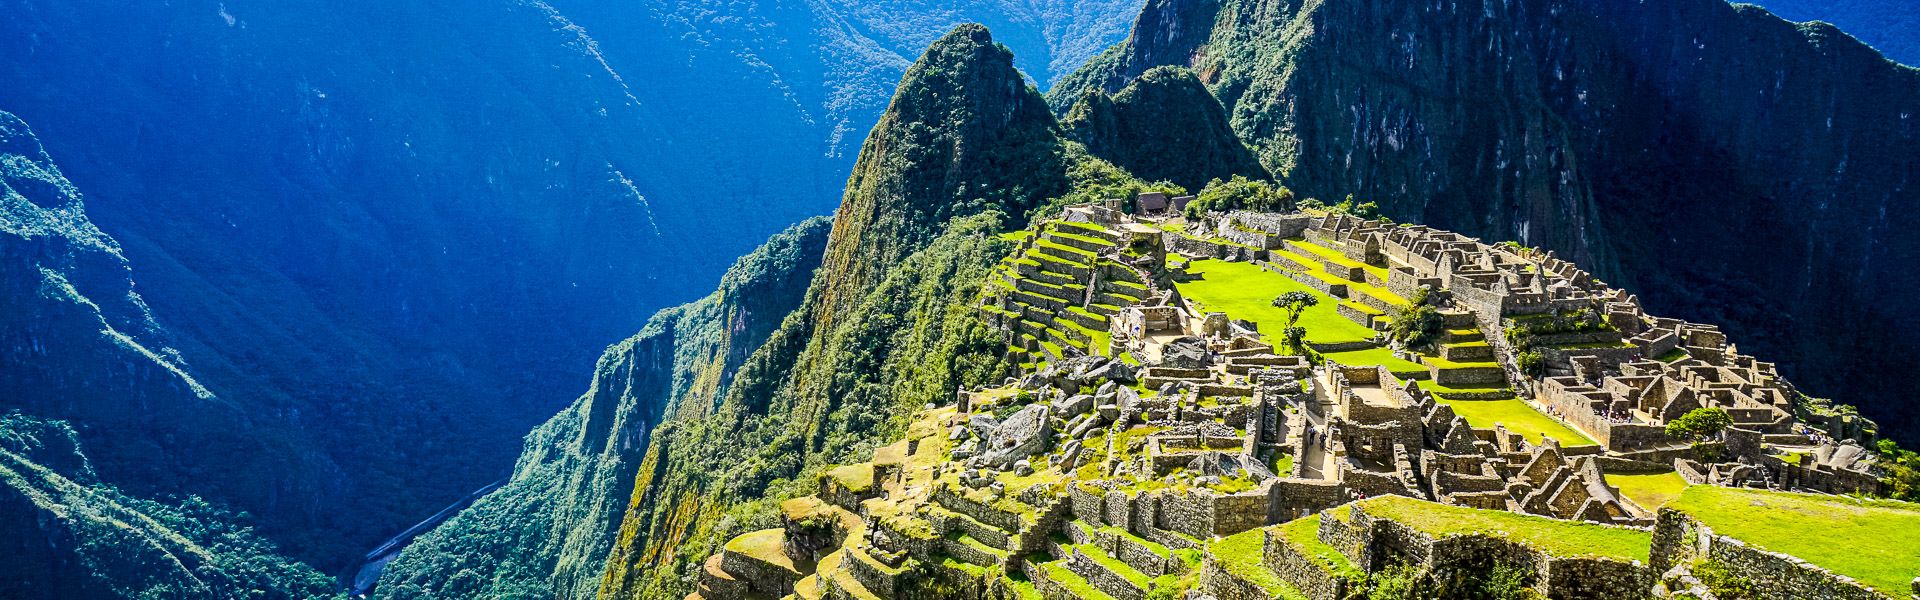 Machu Picchu |  Luisa Mentz / Chamleon